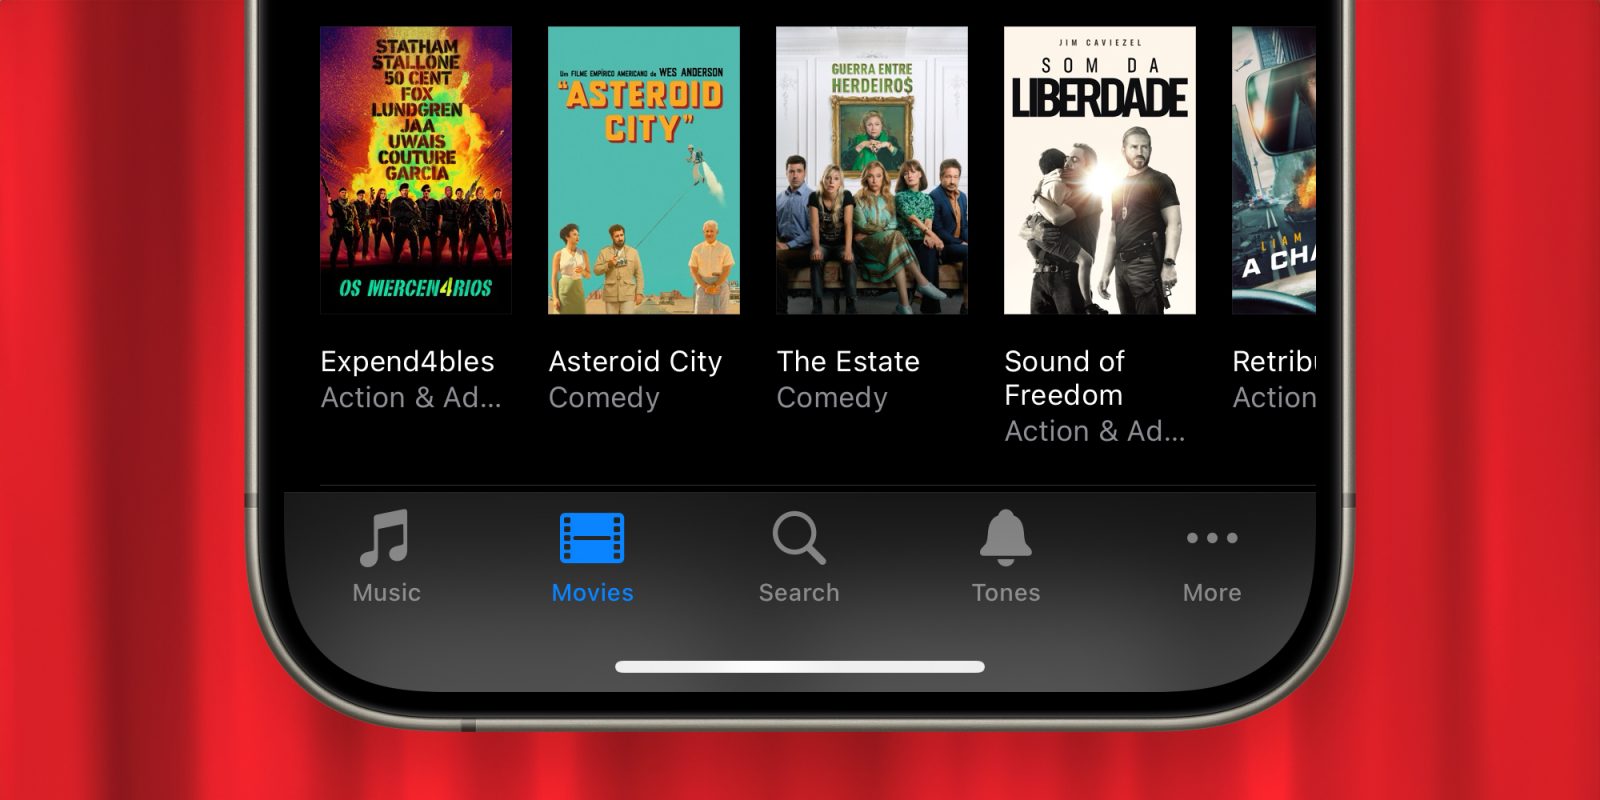 Apple va supprimer progressivement l'iTunes Movie Store dédié avec iOS 17.2, en le fusionnant avec l'application TV